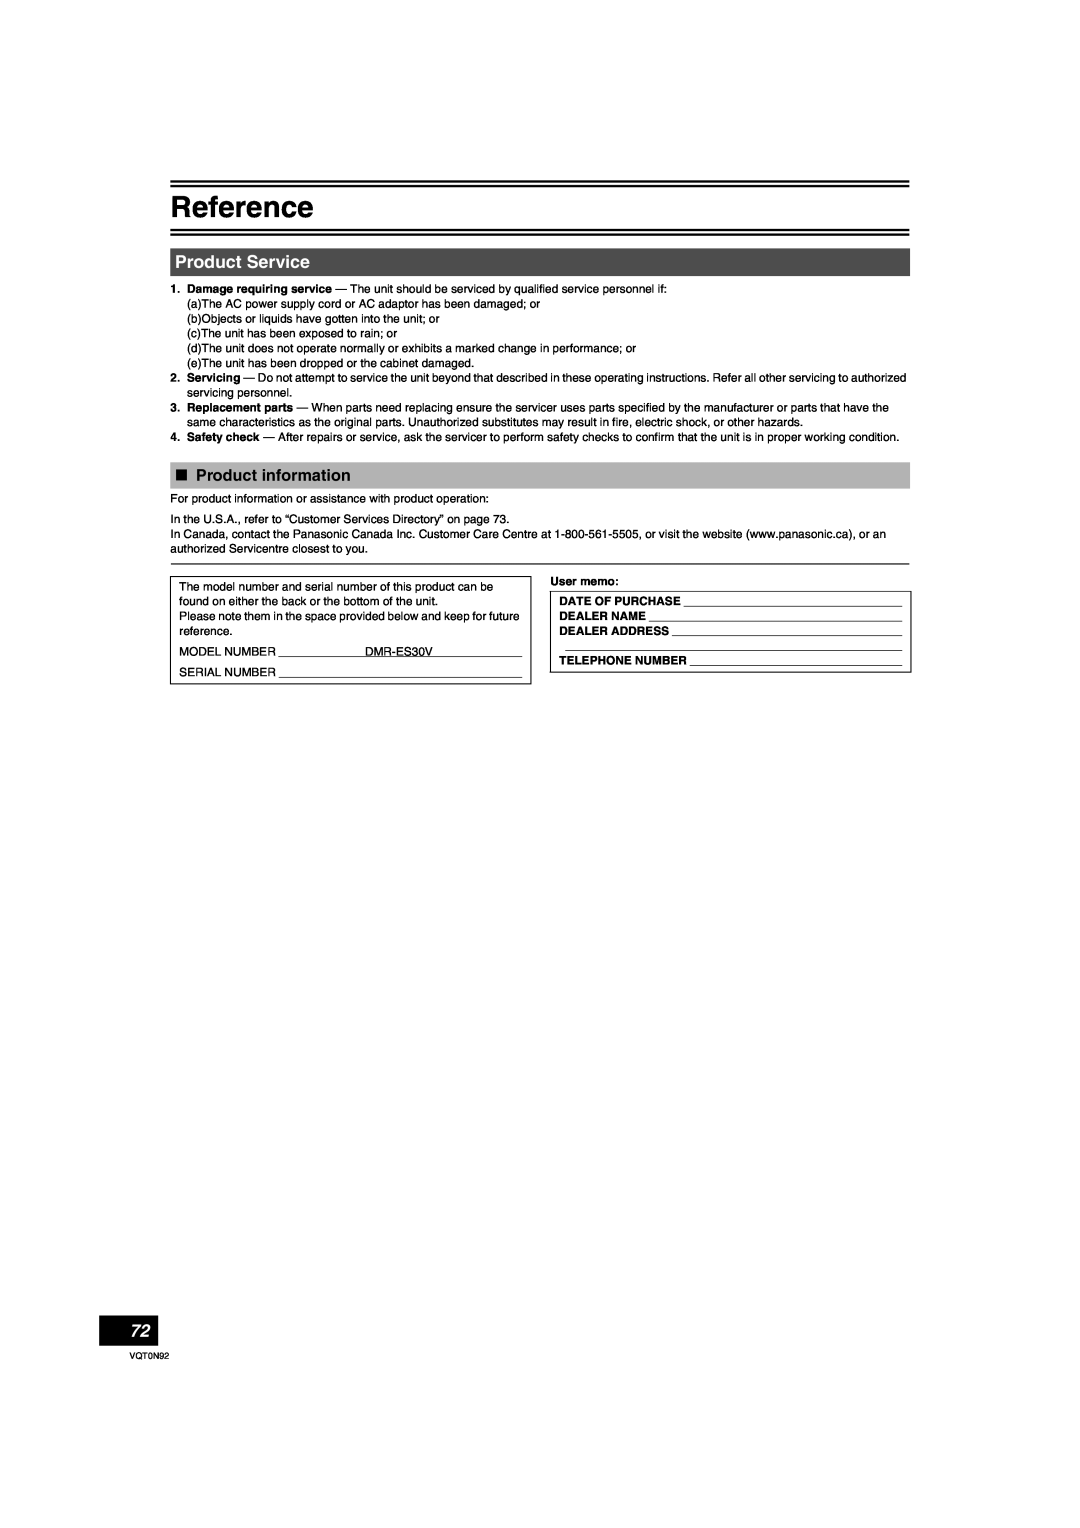 Panasonic DMR-ES30V warranty Product Service, ∫ Product information, Reference 